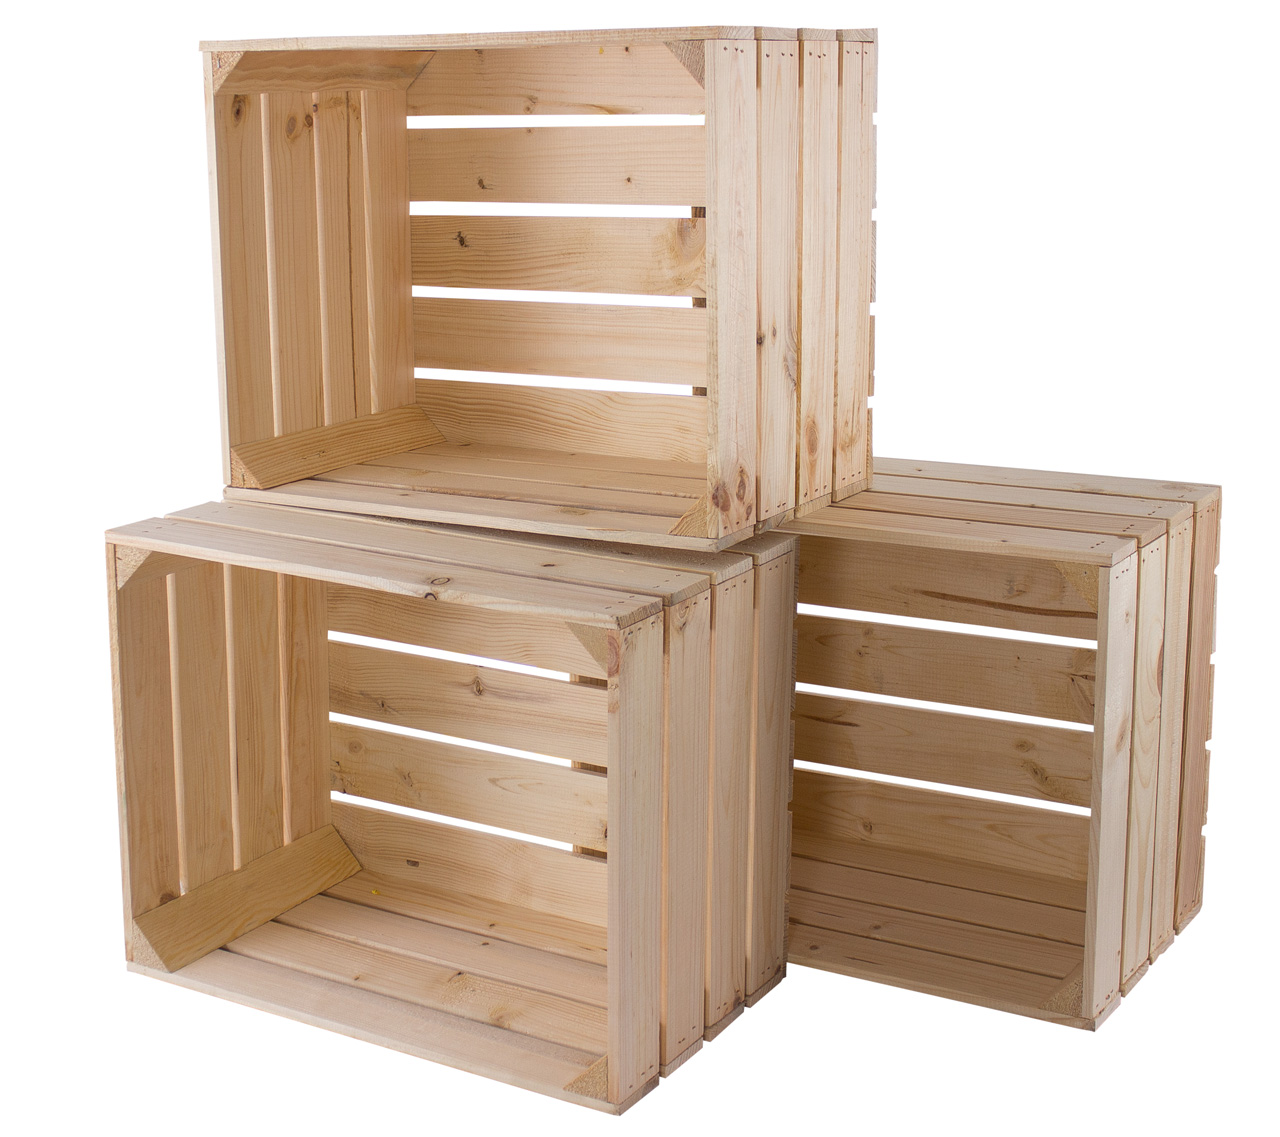 Over instelling Vervuild Verzoekschrift Houten kistje kopen? Online het grootste assortiment houten kistjes | De  Kisten Koning